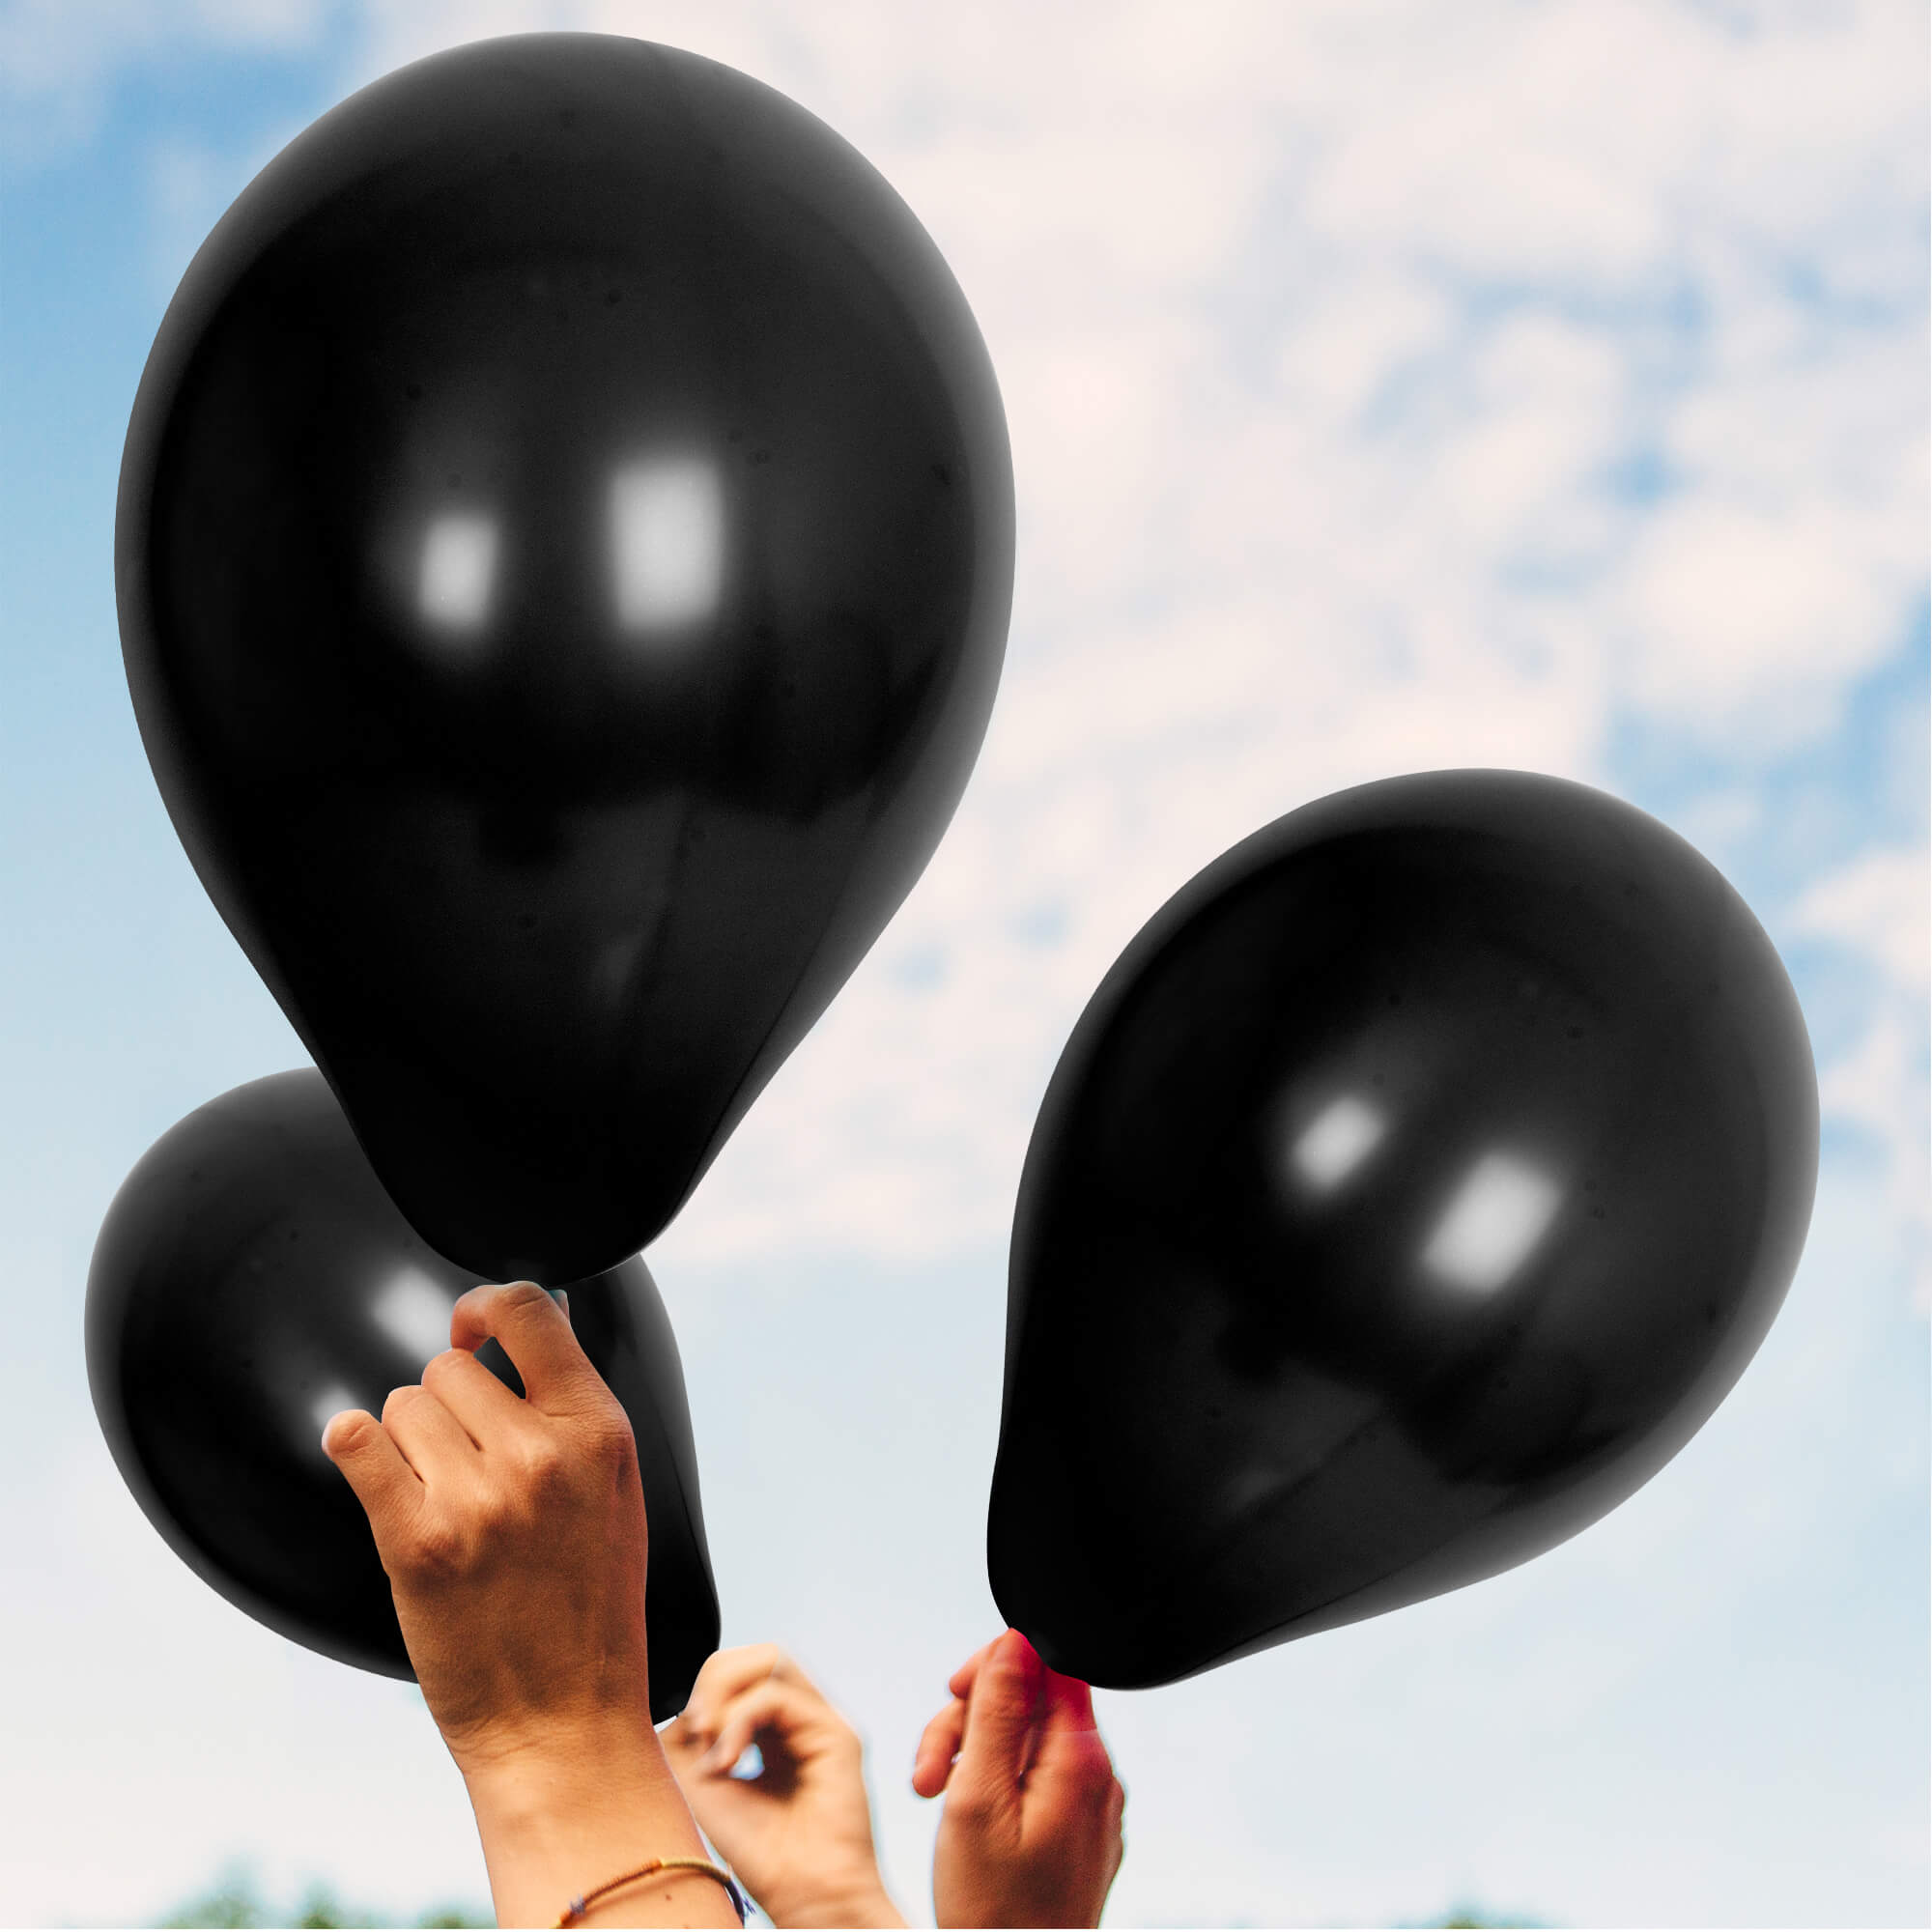 Fun® Helium Balloon 10inch - Black Pack of 20